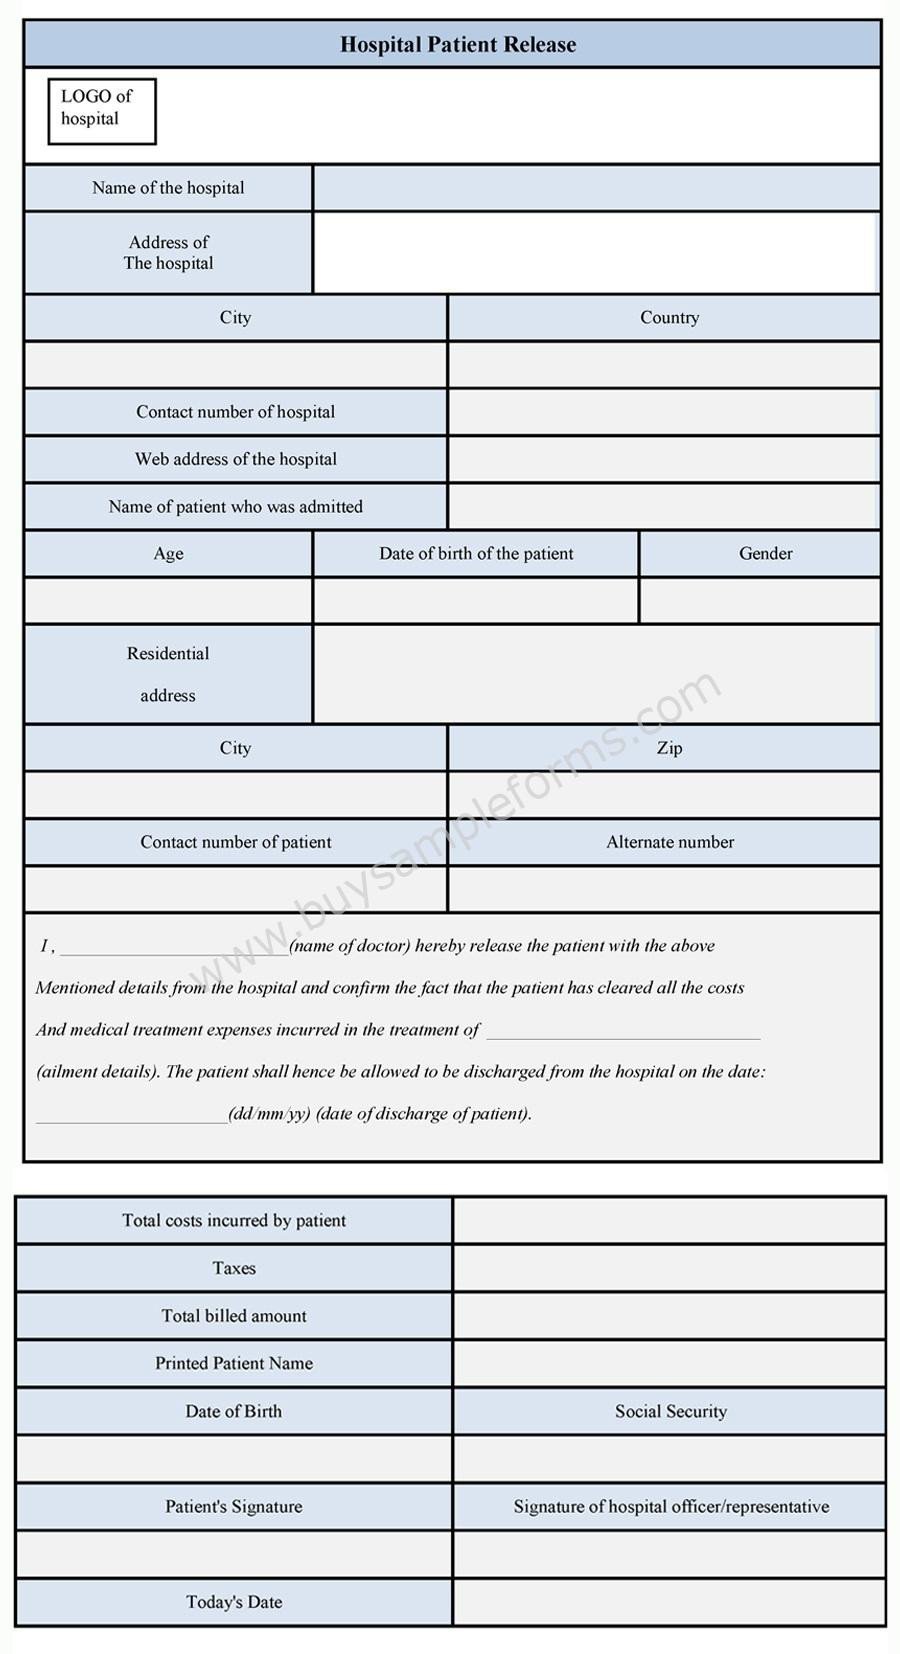 Patient Discharge form Template Hospital Patient Release form Sample forms